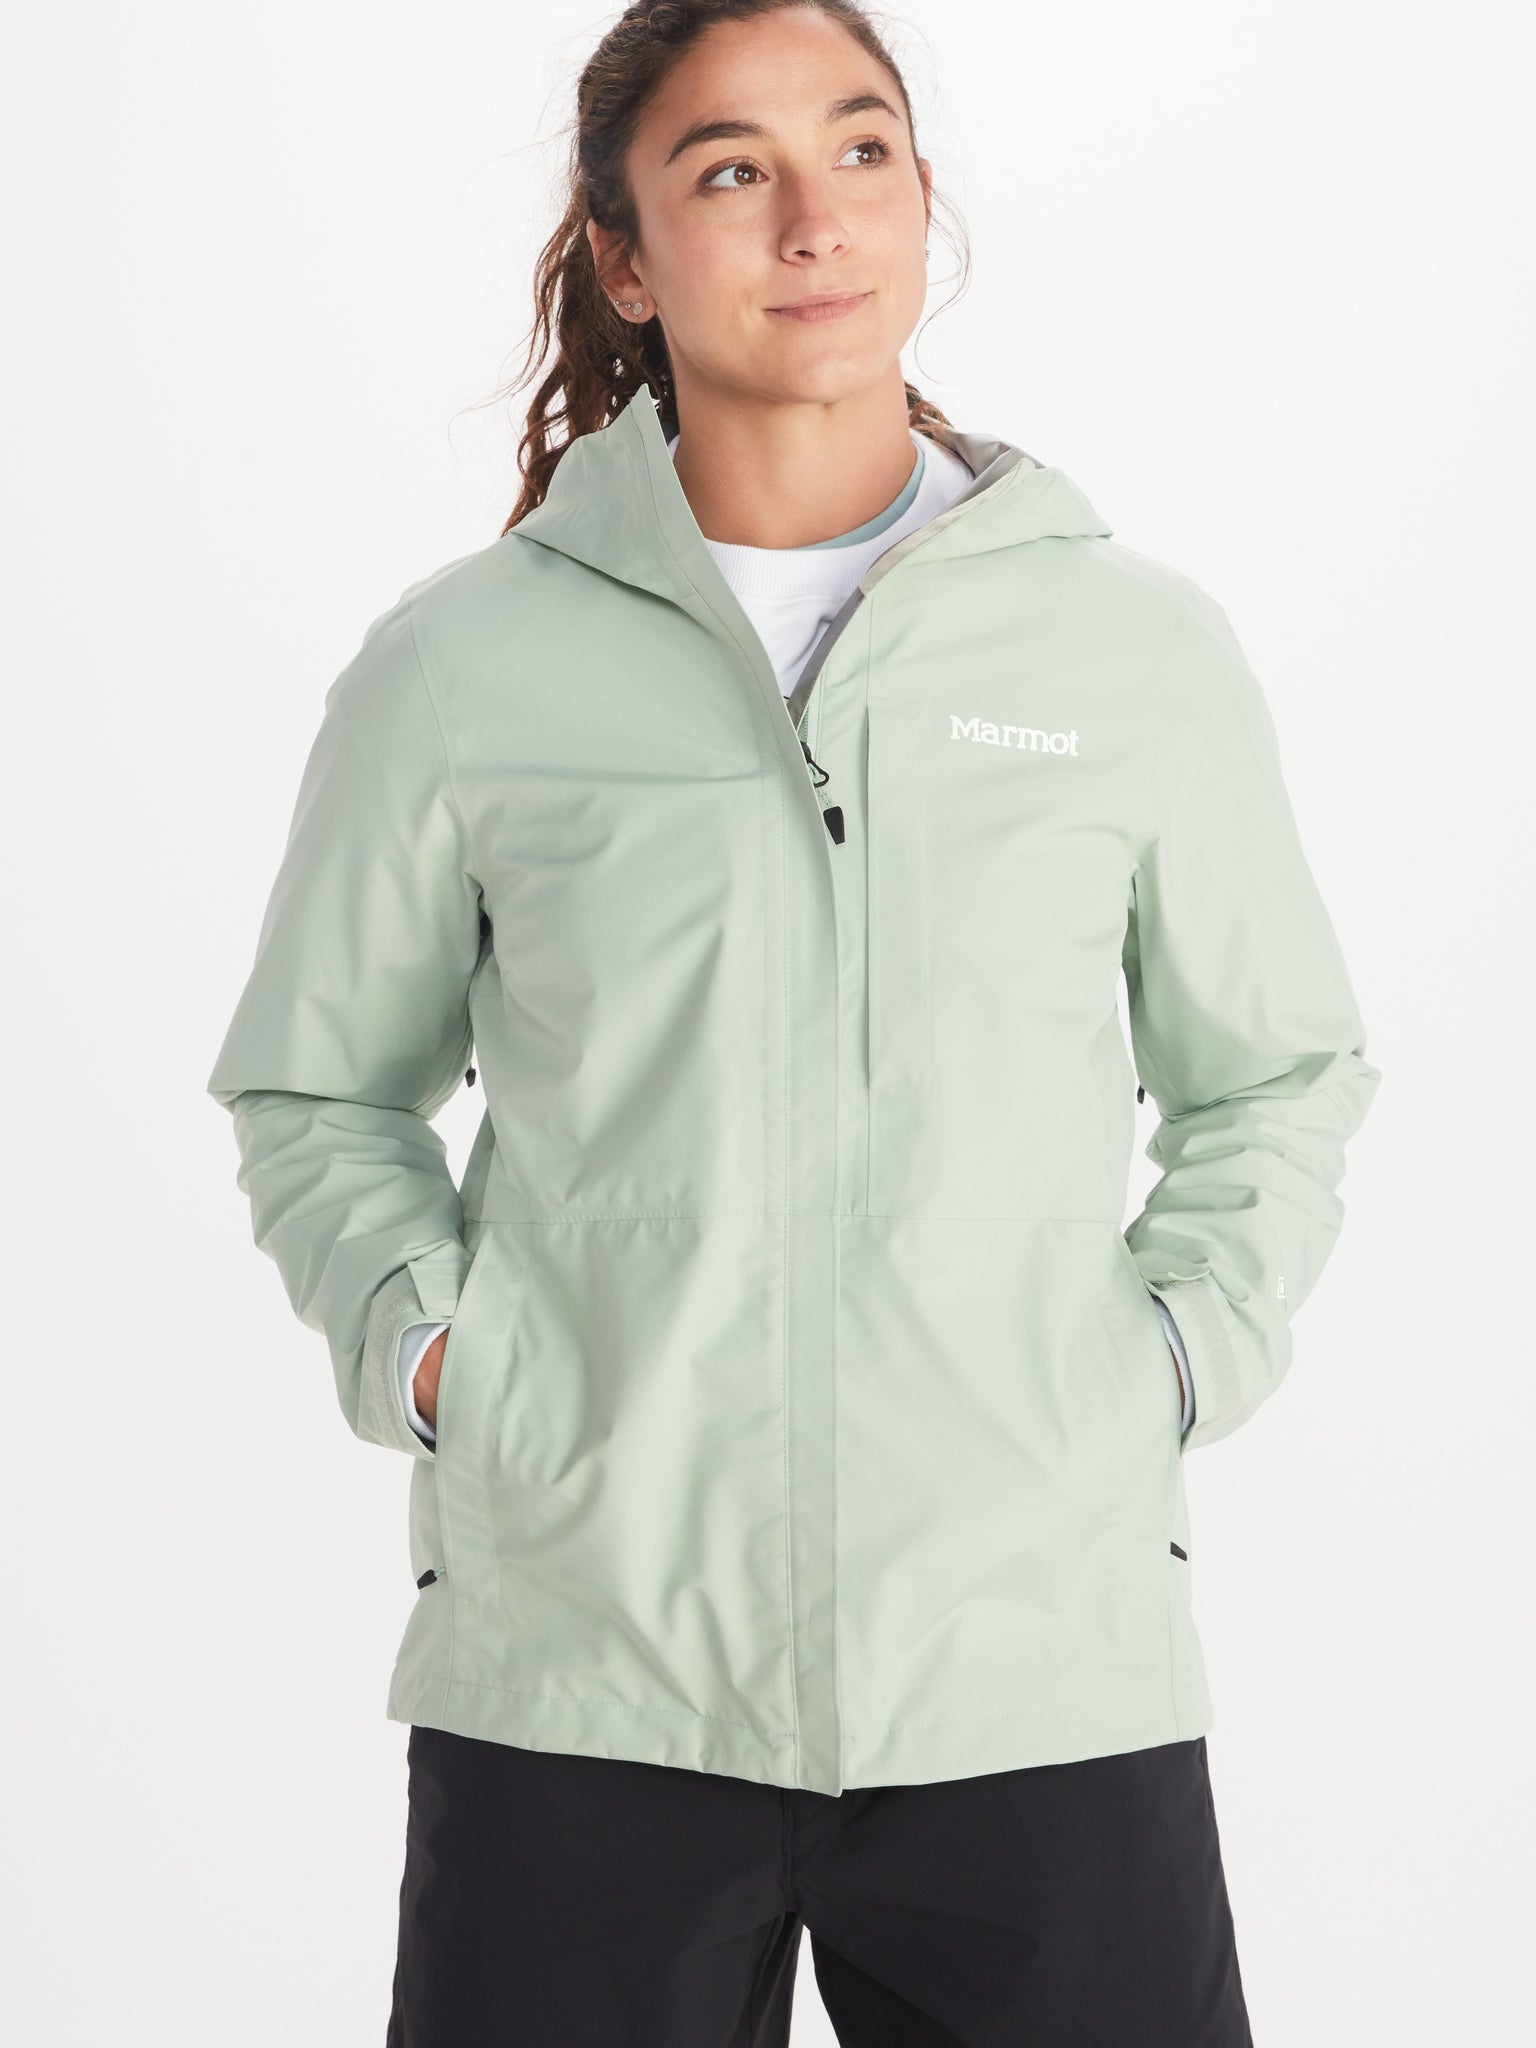 Marmot Men's Minimalist Jacket New, Waterproof GORE-TEX Jacket, Lightweight  Rain Jacket, Windproof Raincoat, Breathable Windbreaker, Ideal for Running  and Hiking, Arctic Navy (2020), S : Amazon.co.uk: Fashion